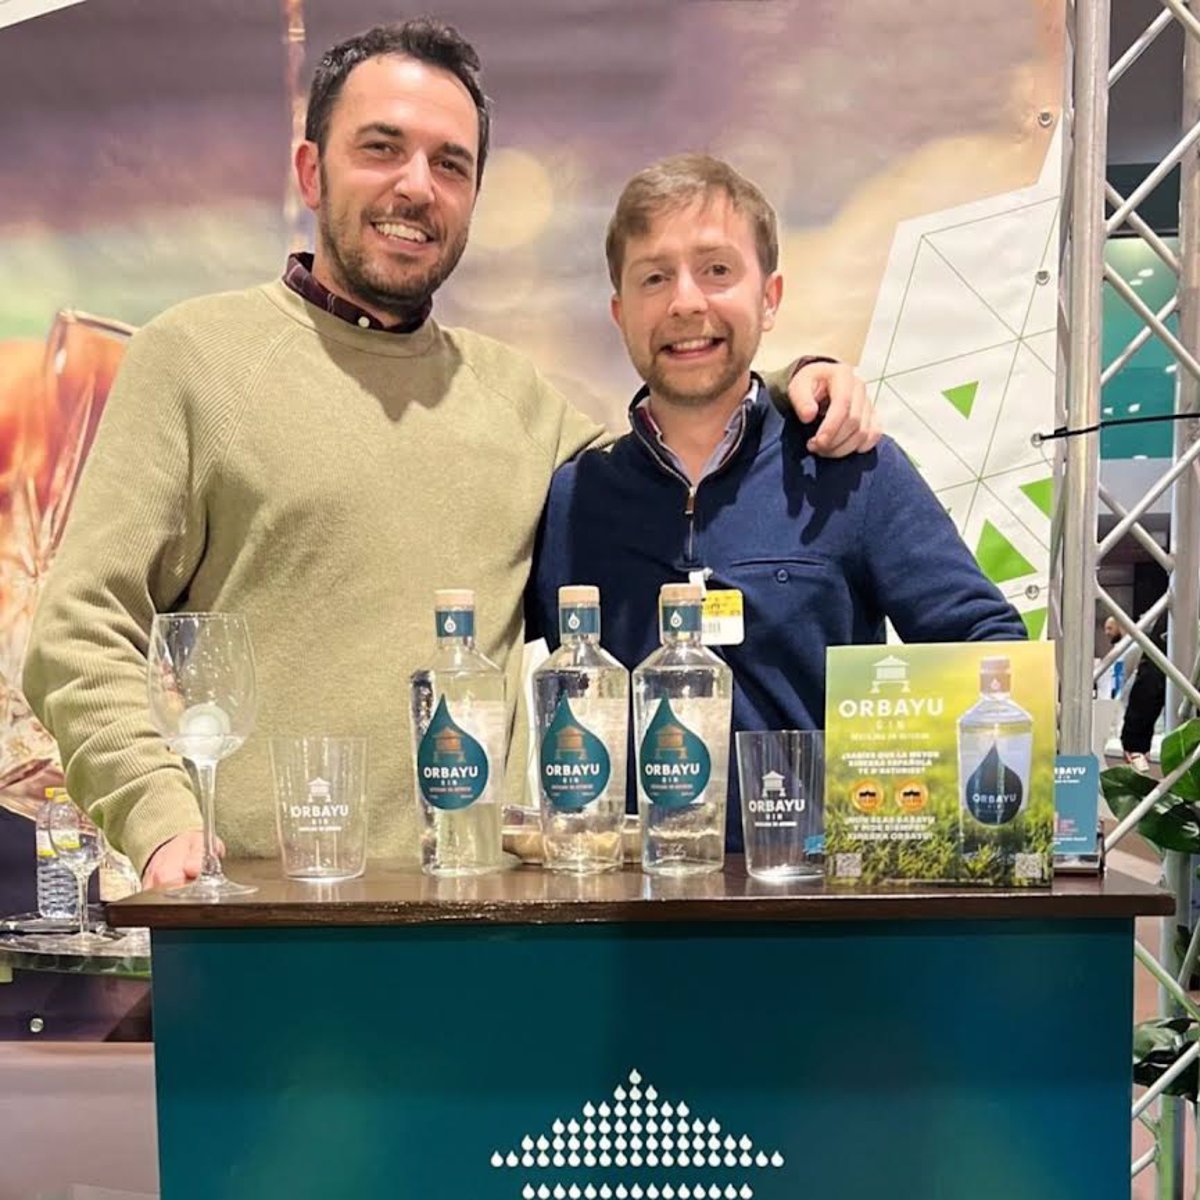 La ginebra asturiana Orbayu Gin, premiada en el London Spirits